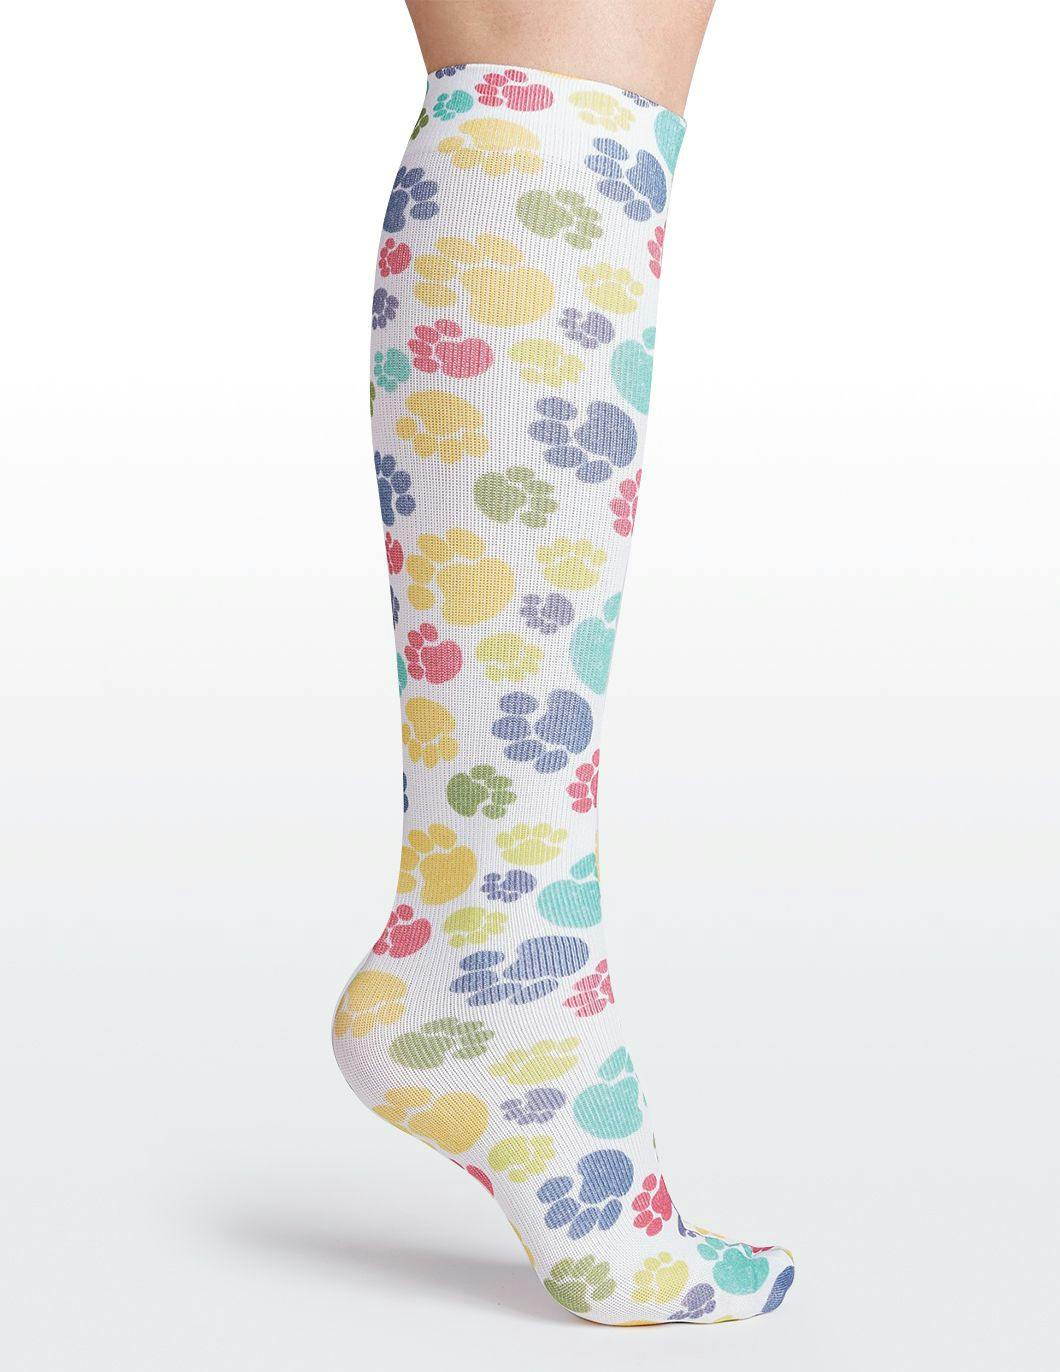 cutieful-womens-compression-socks-8-15-mmhg-paws